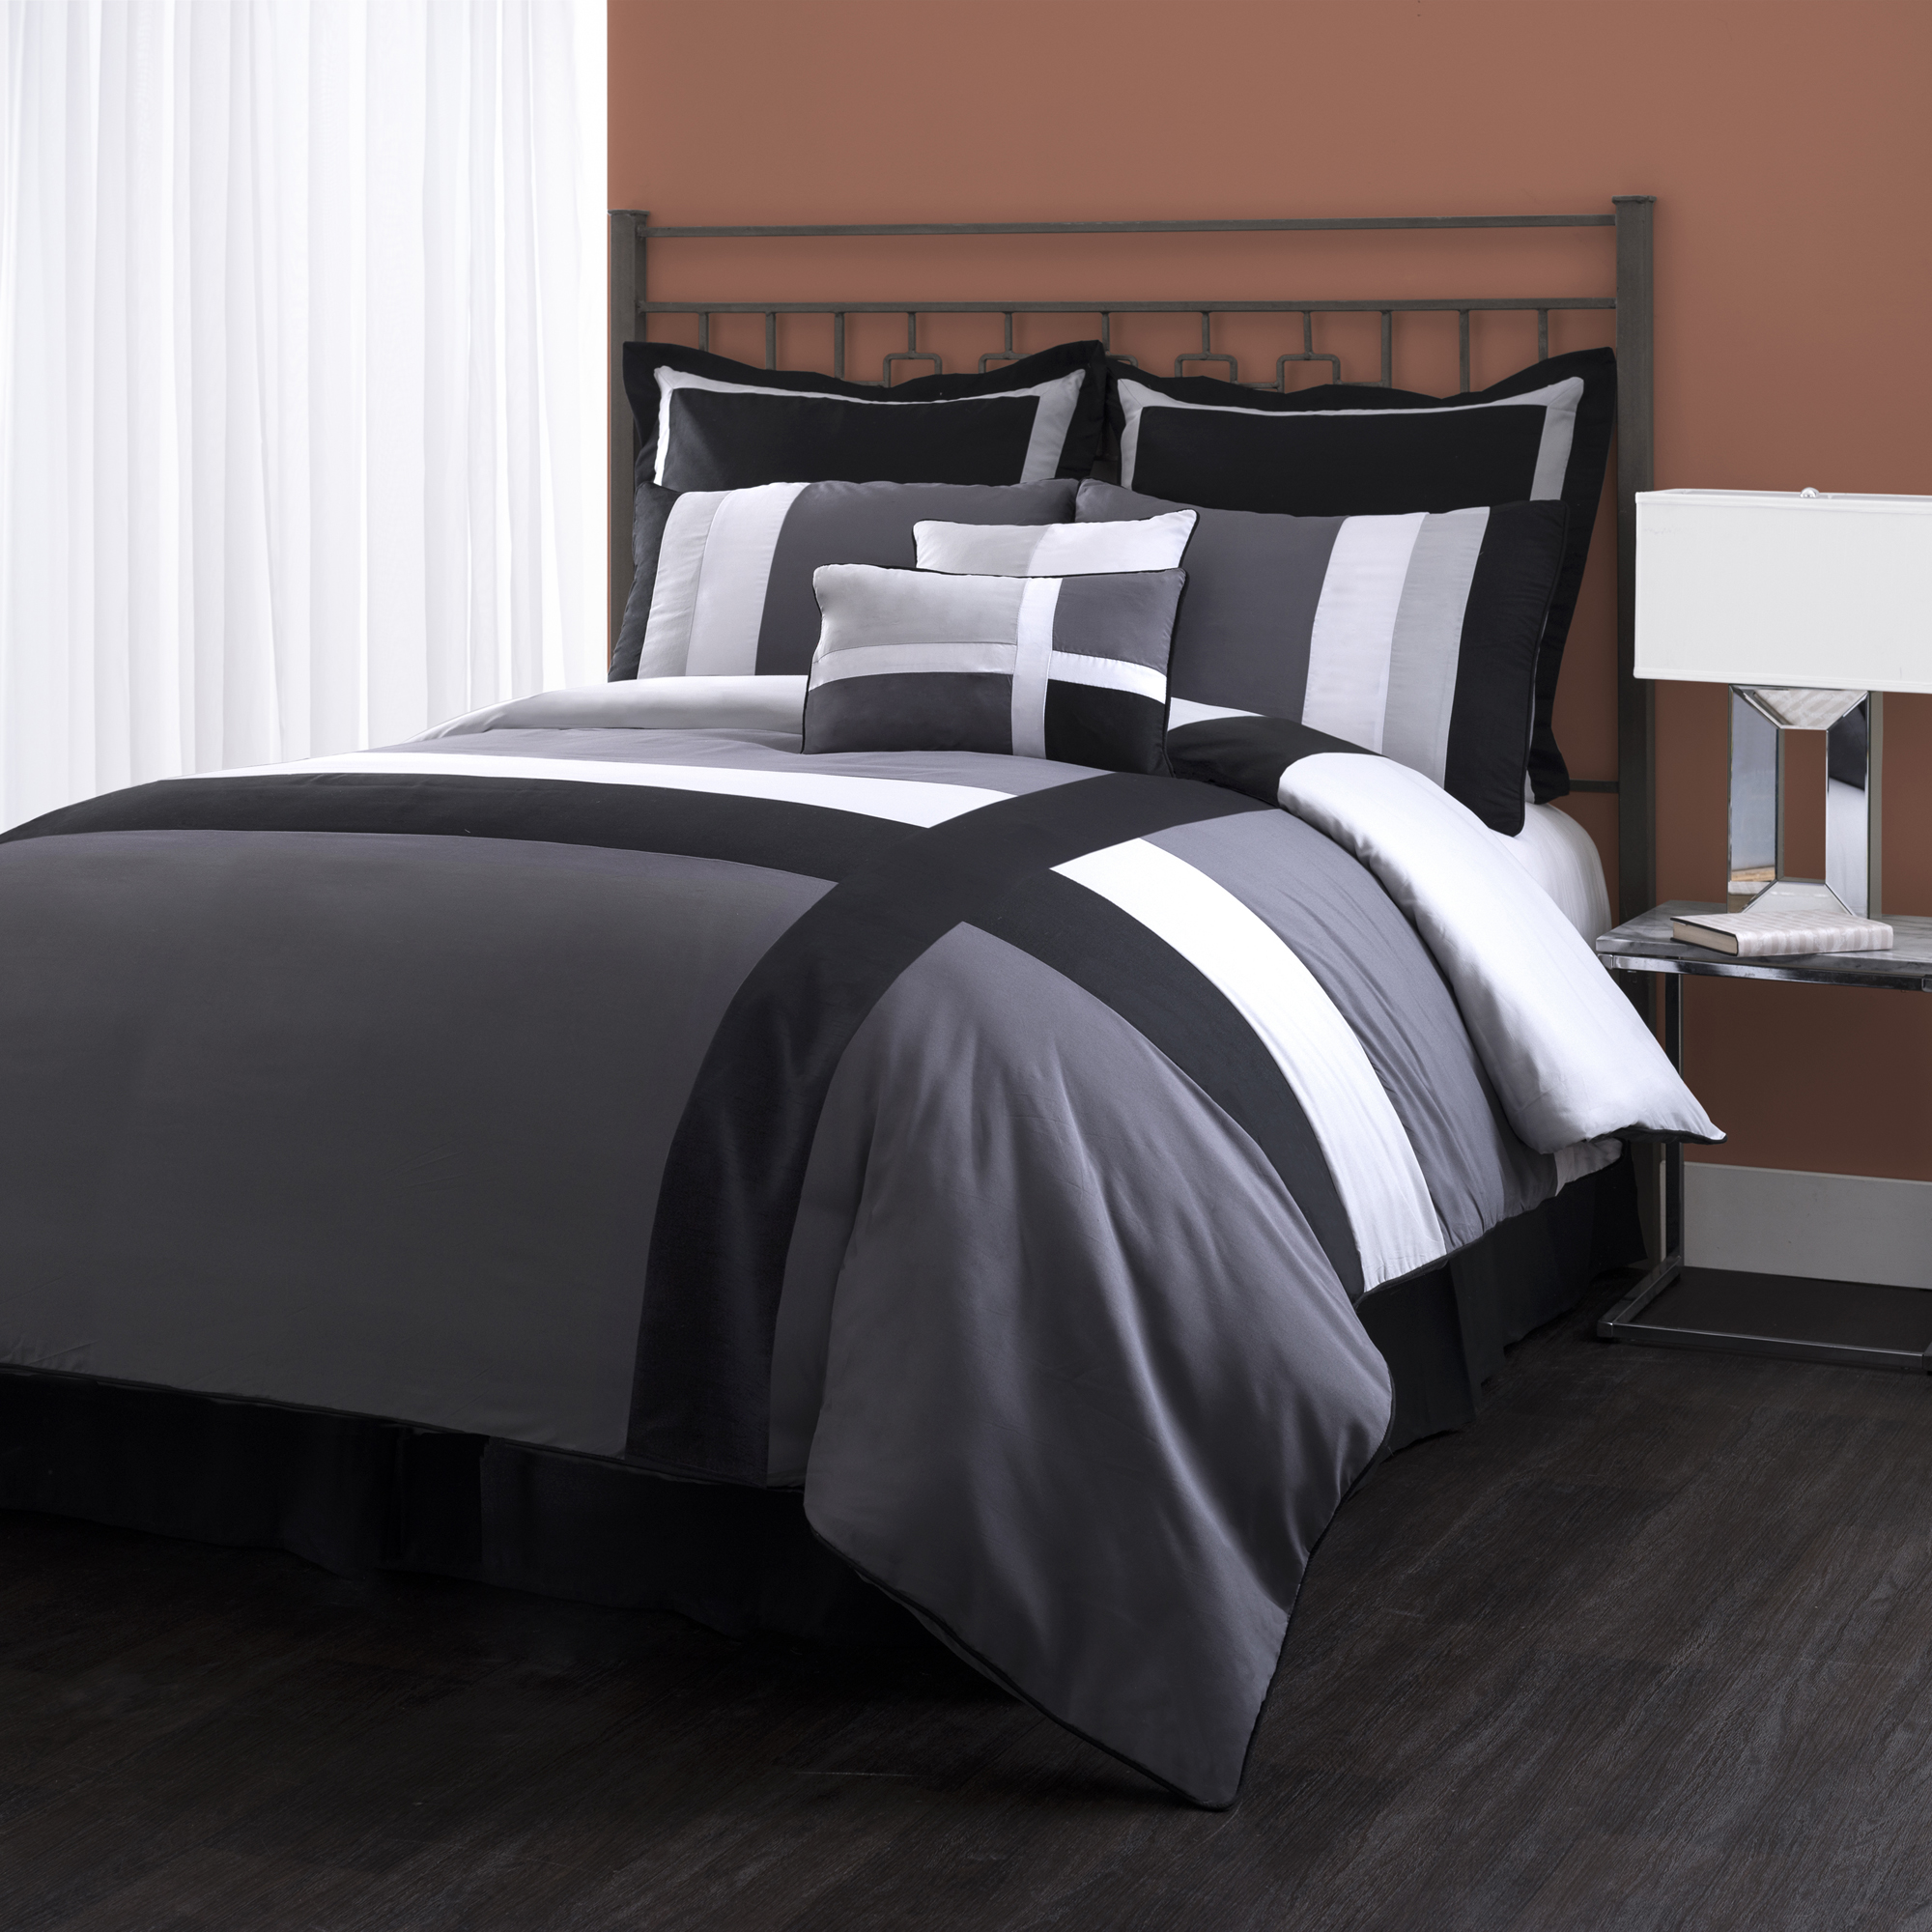 Isa 8-pc Gray/Black Comforter Set